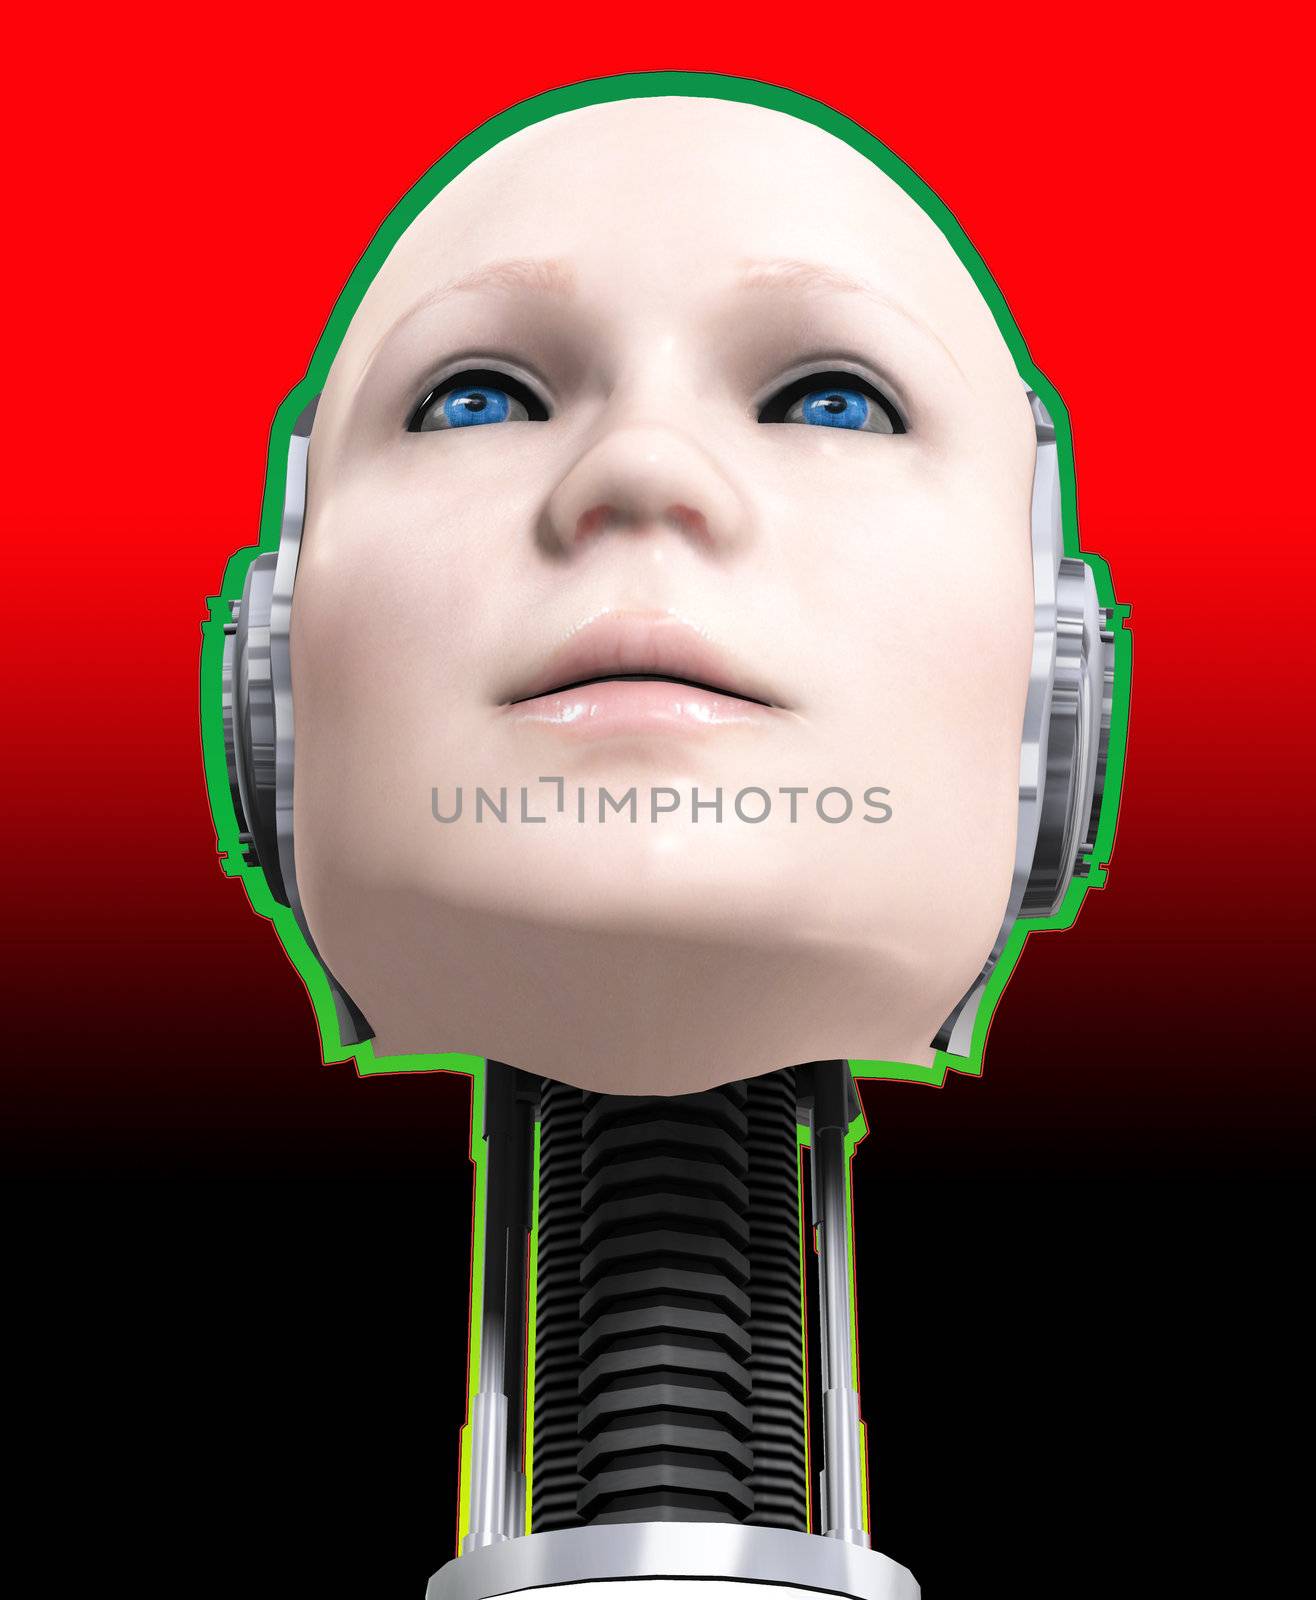 An image of a part women part machine cyborg.